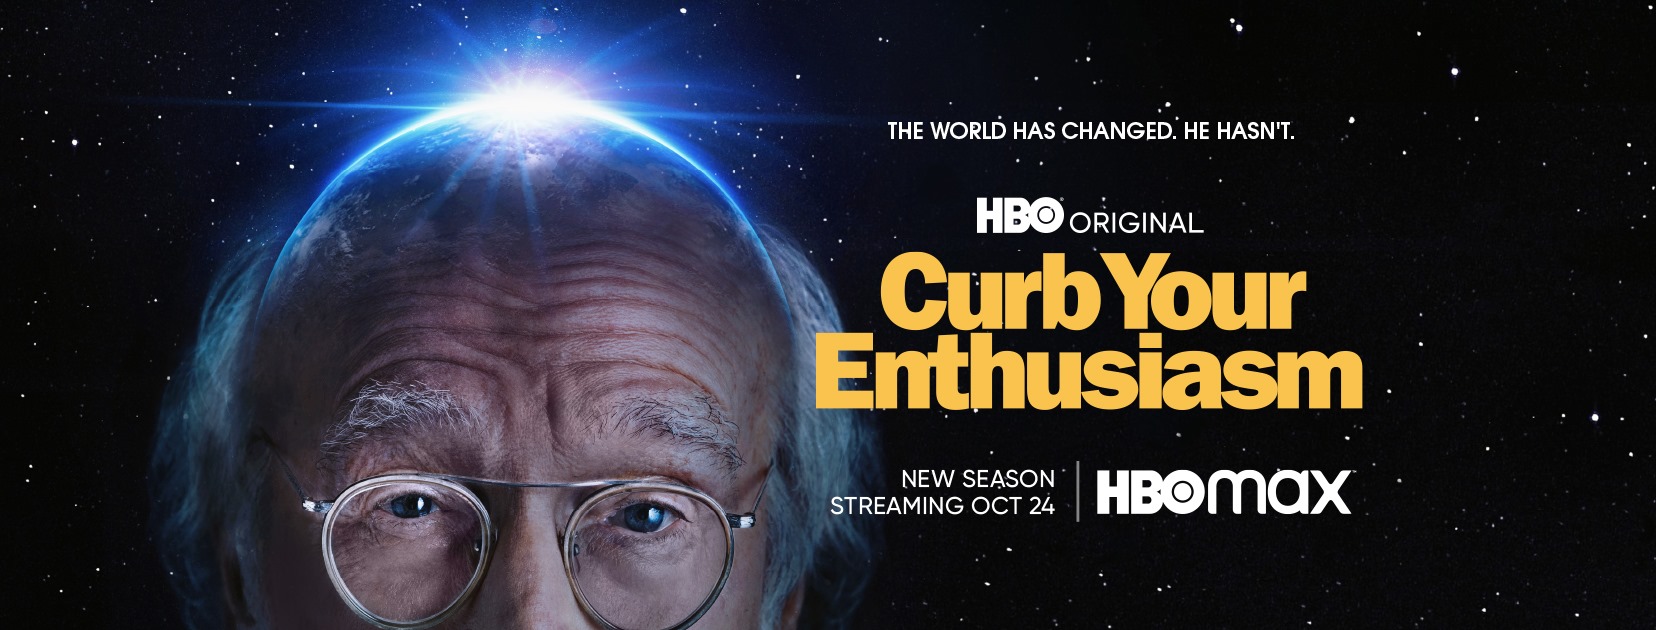 hbo curb your enthusiasm season 7 episode